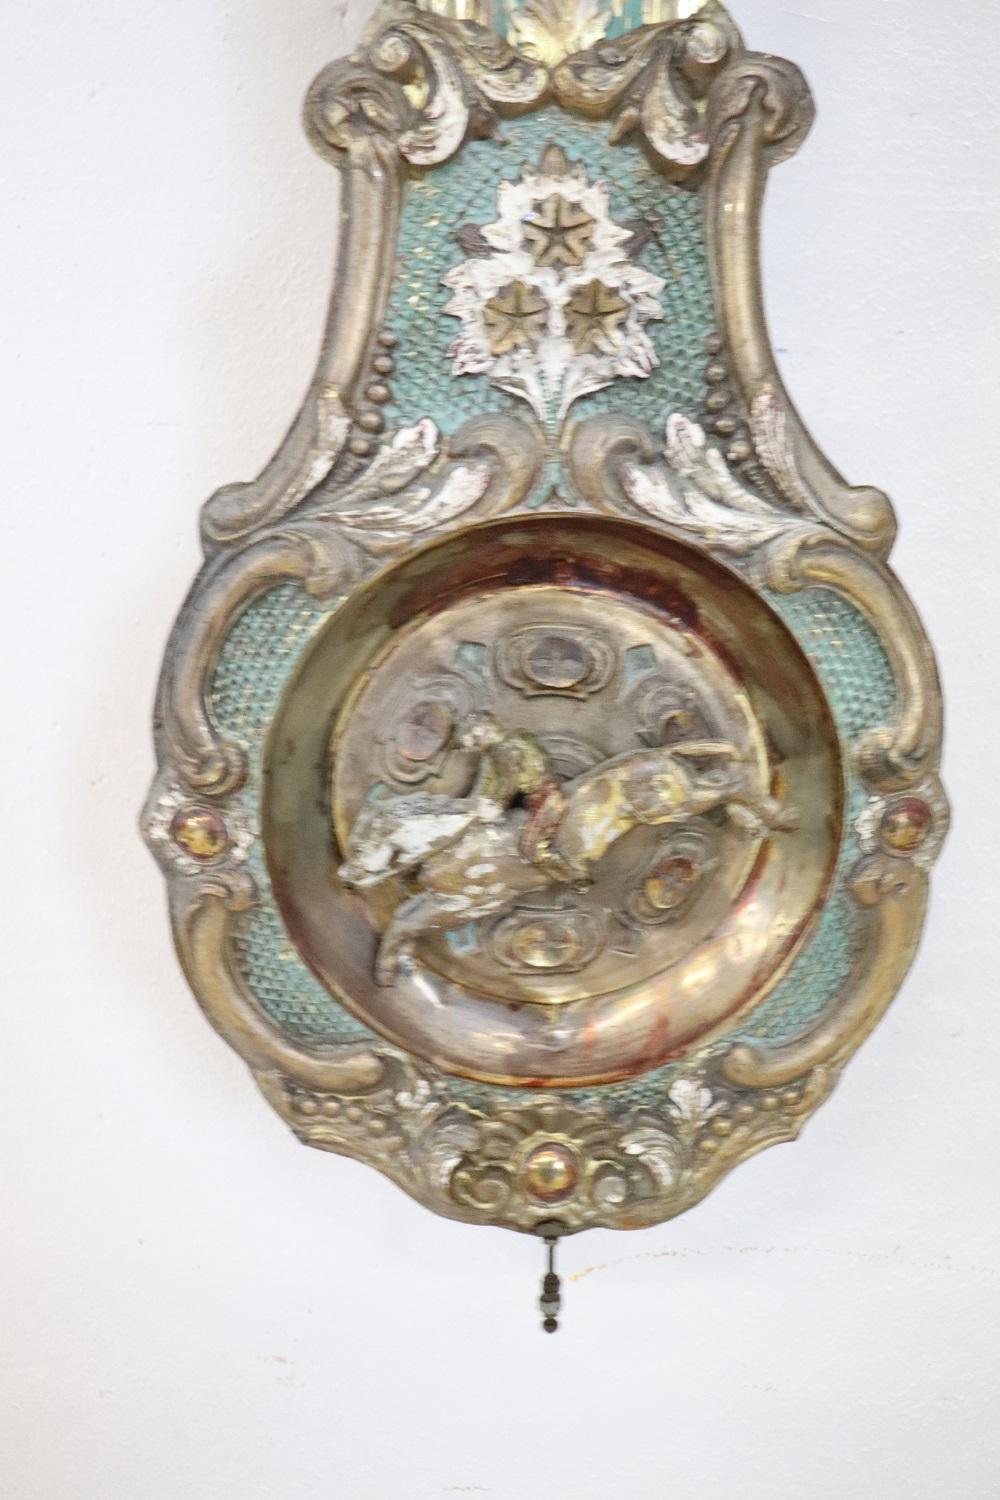 19th Century Antique Fench Wall Clock In Good Condition For Sale In Casale Monferrato, IT